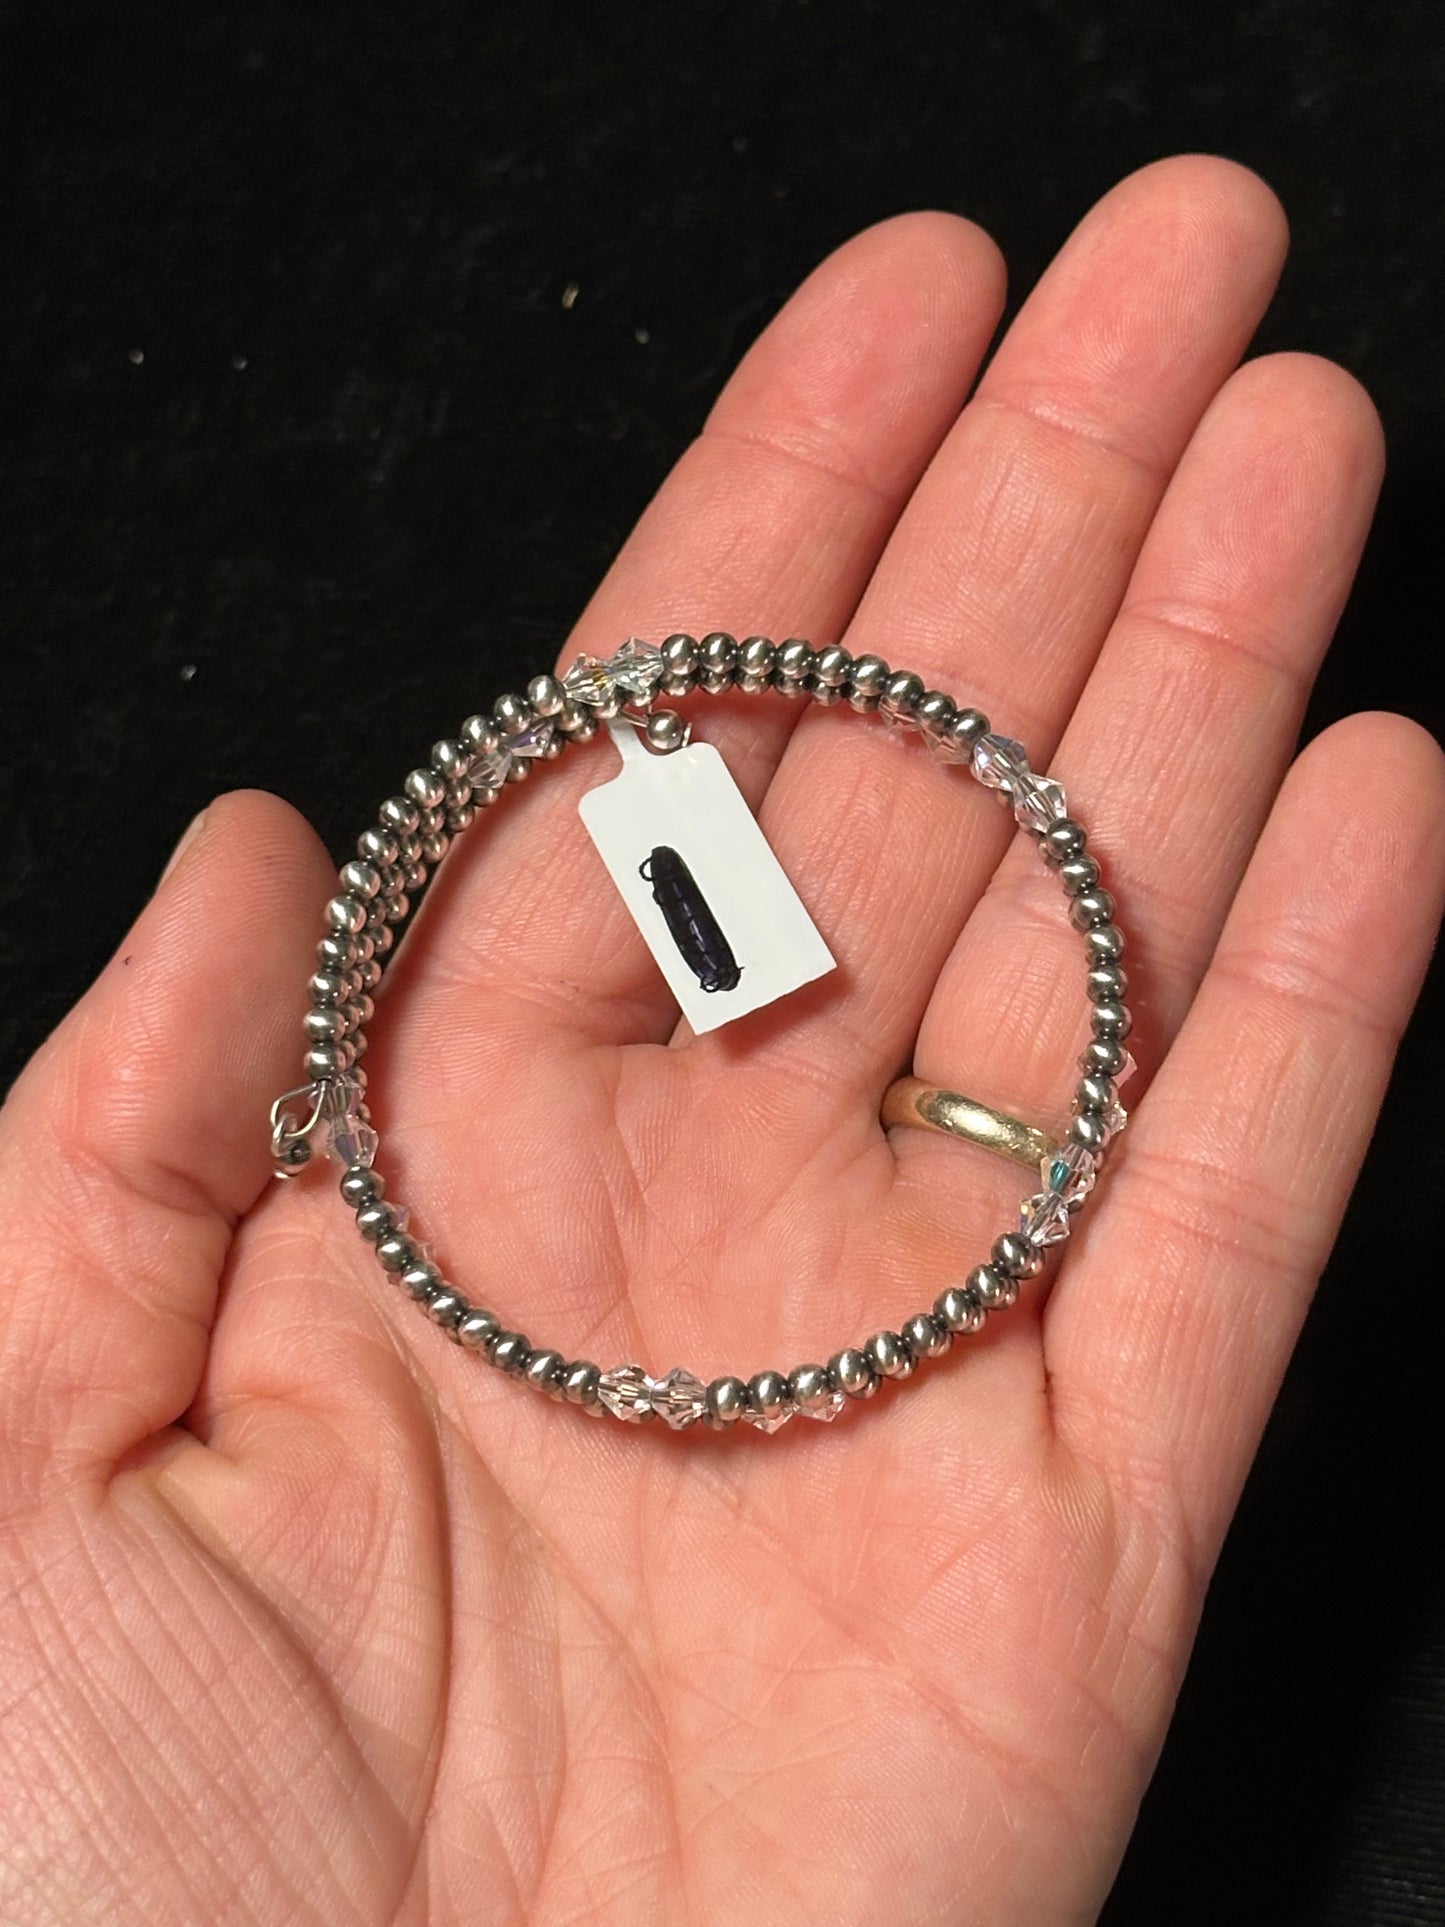 3mm Memory Wire Bracelet with Swarovski Crystals